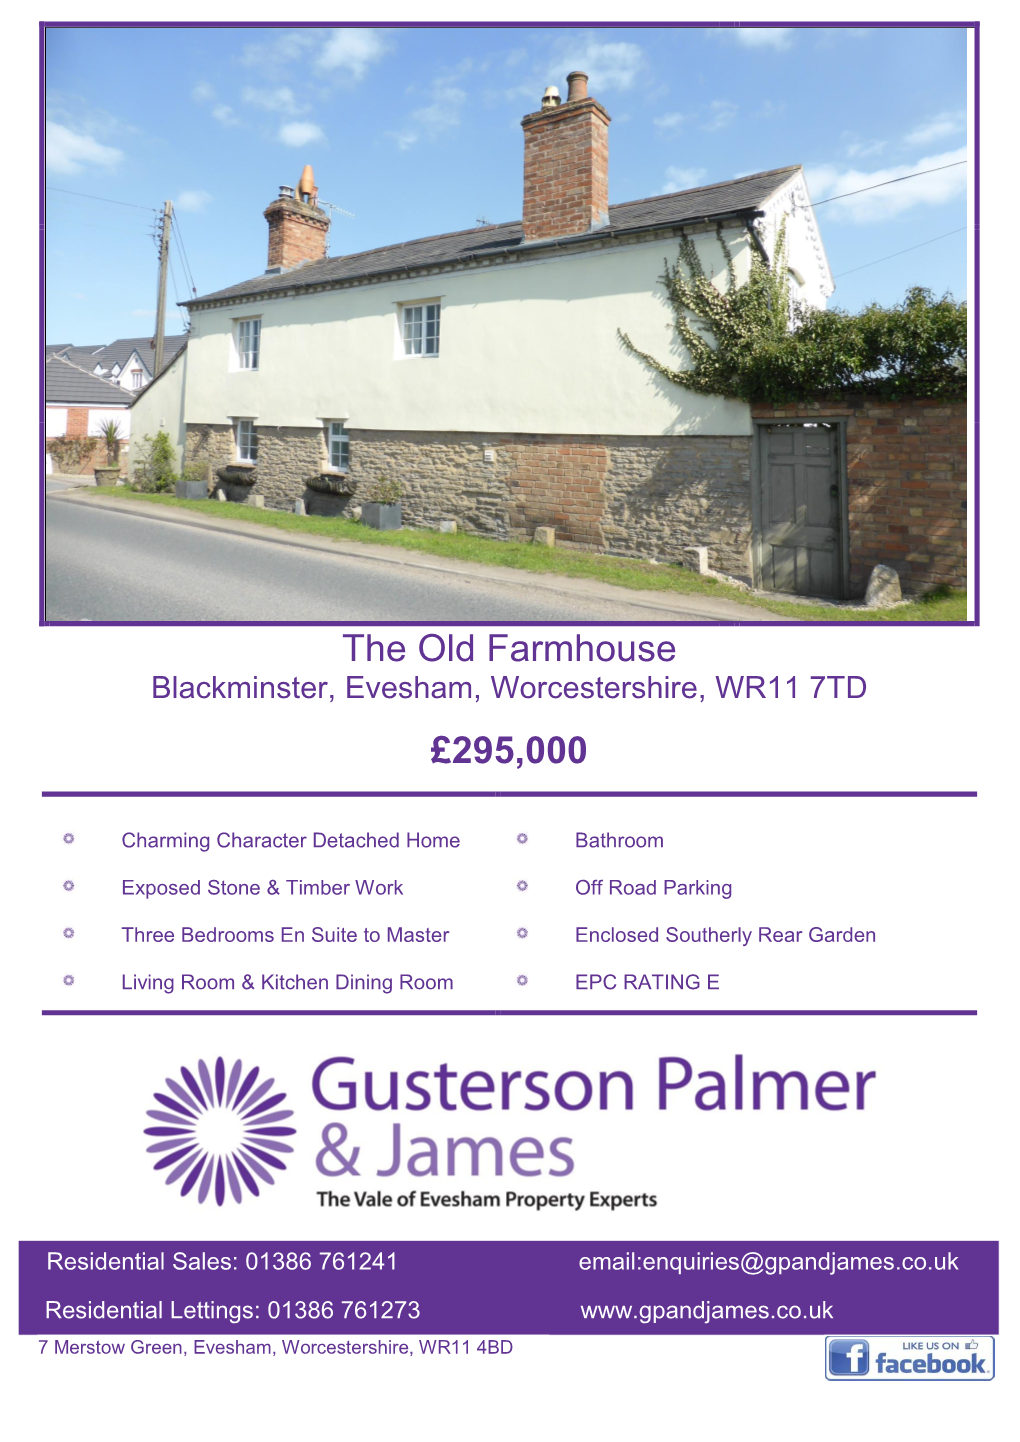 The Old Farmhouse Blackminster, Evesham, Worcestershire, WR11 7TD